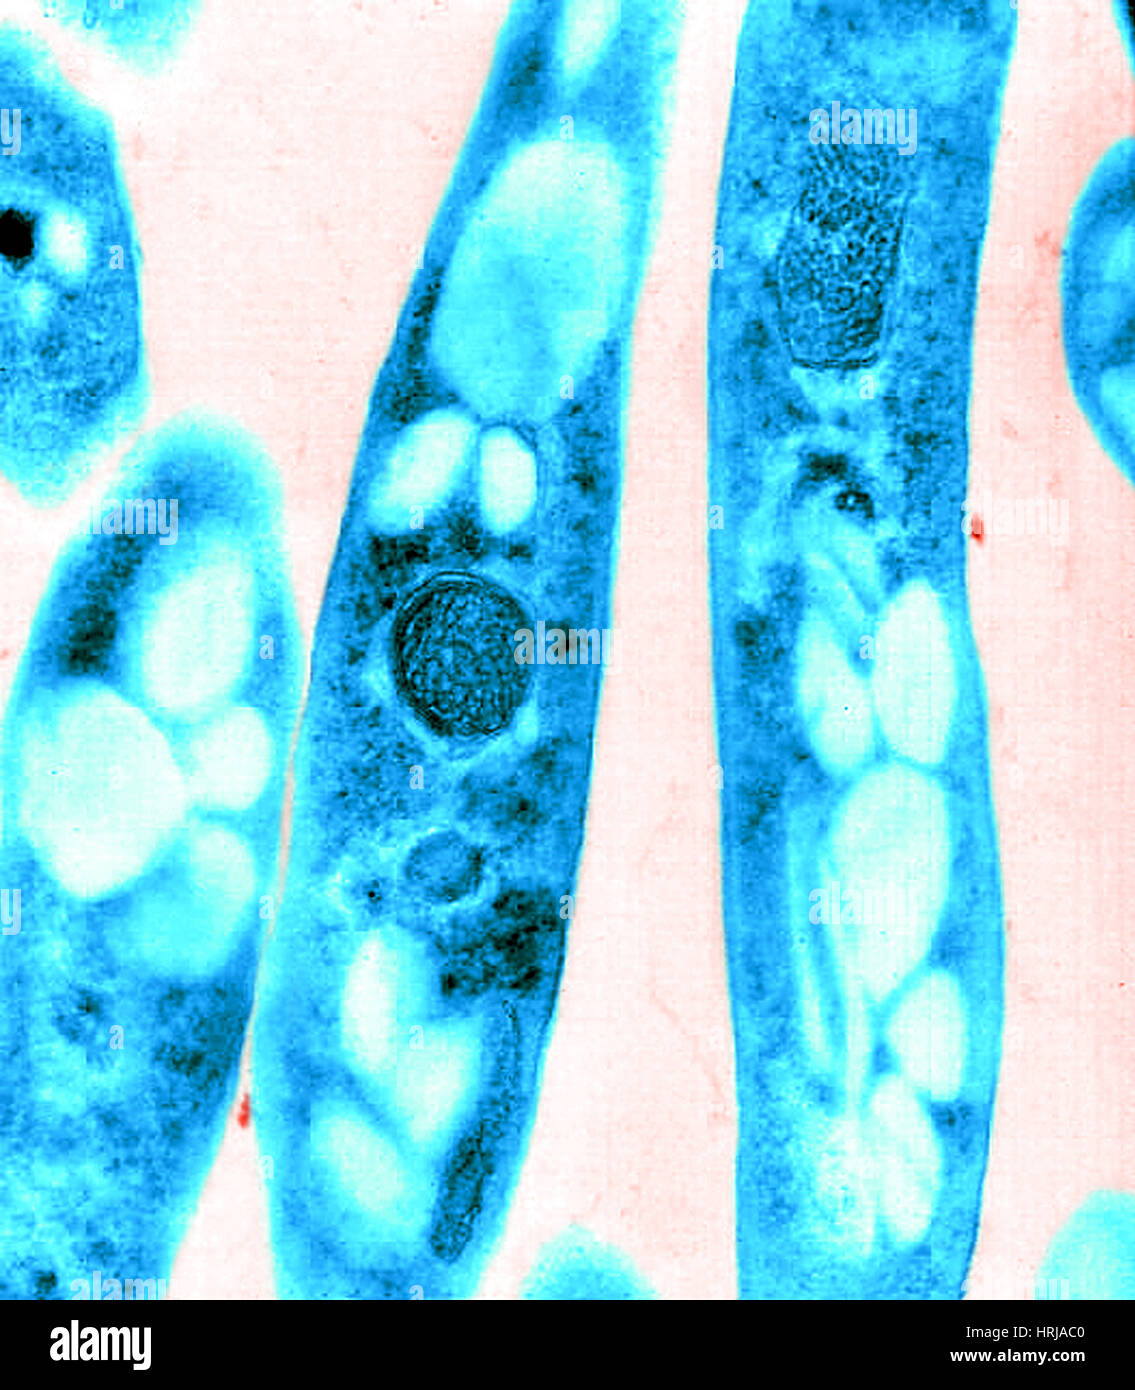 Anthrax, Bacillus anthracis Bacteria, TEM Stock Photo